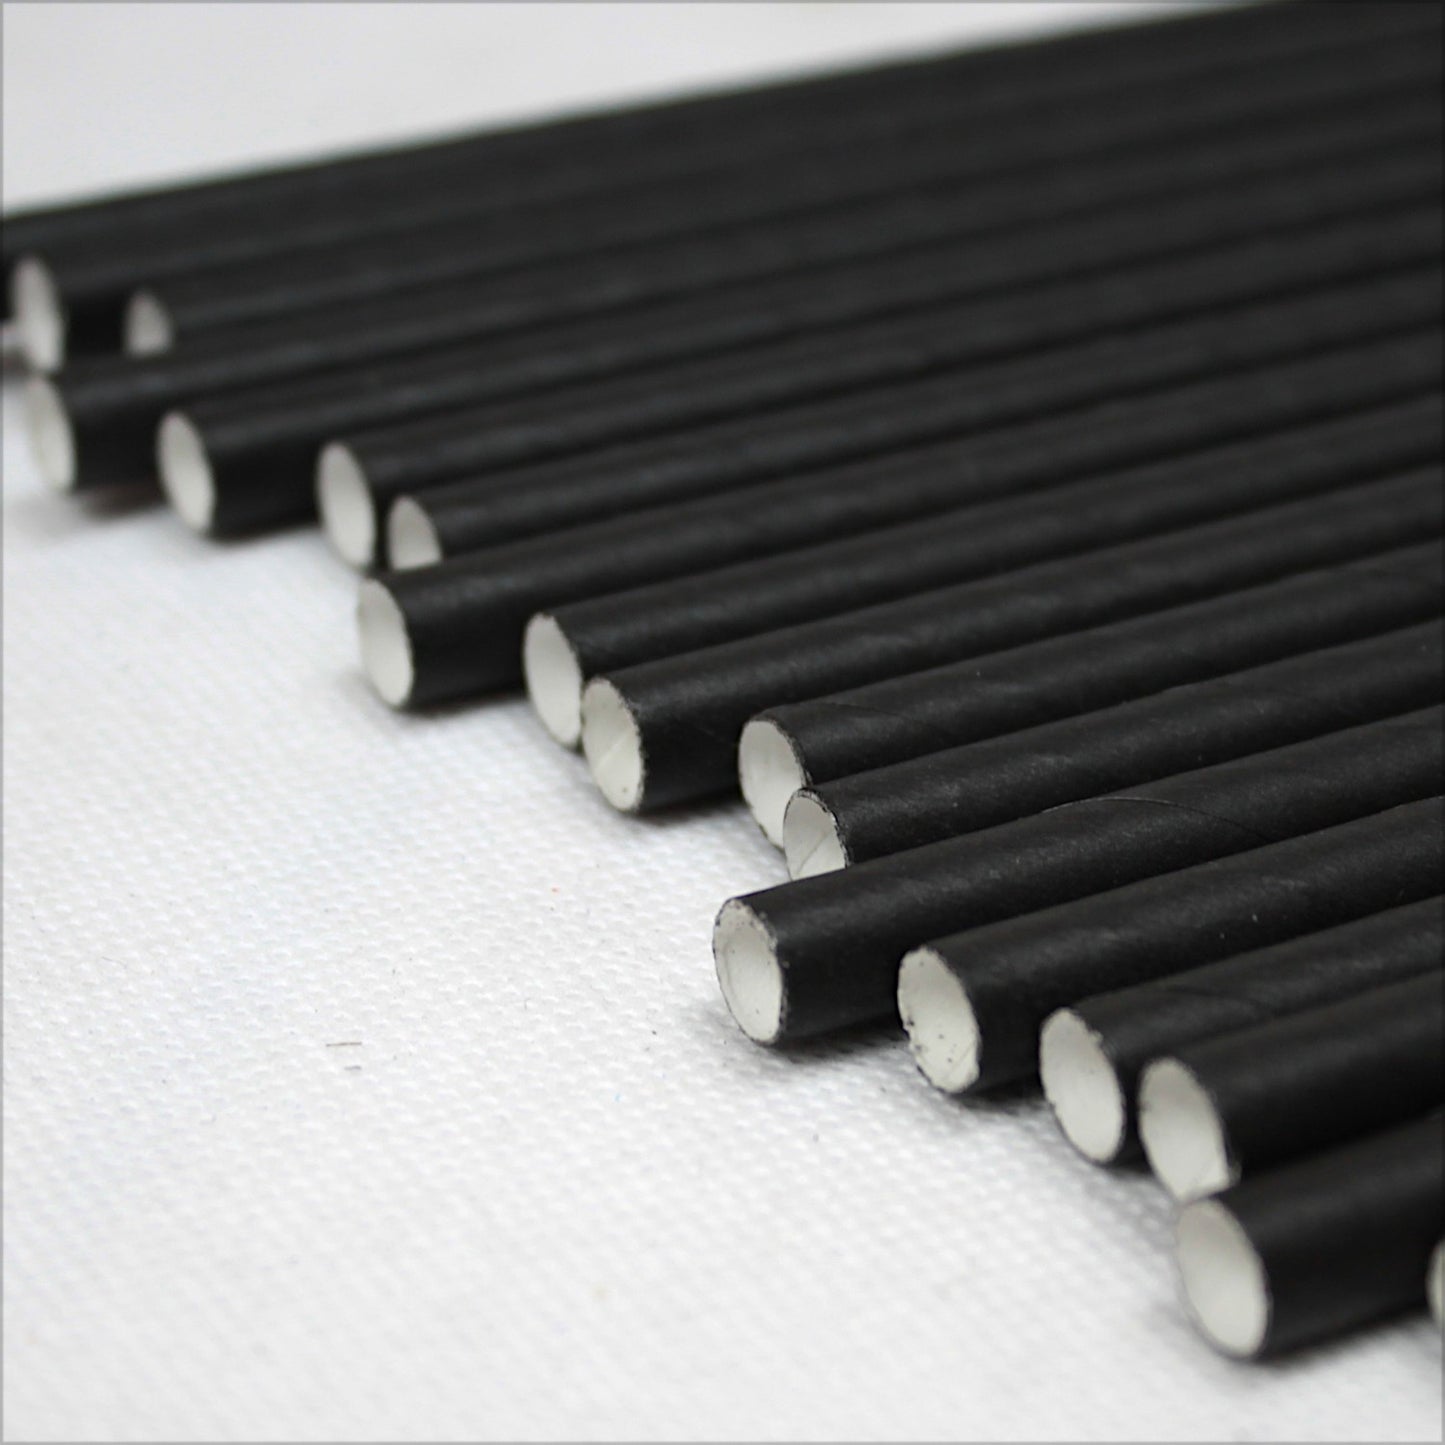 Black Paper Straws (8mm x 200mm) - Quality Drinking Straws for Smoothies and Milkshakes - Intrinsic Paper Straws